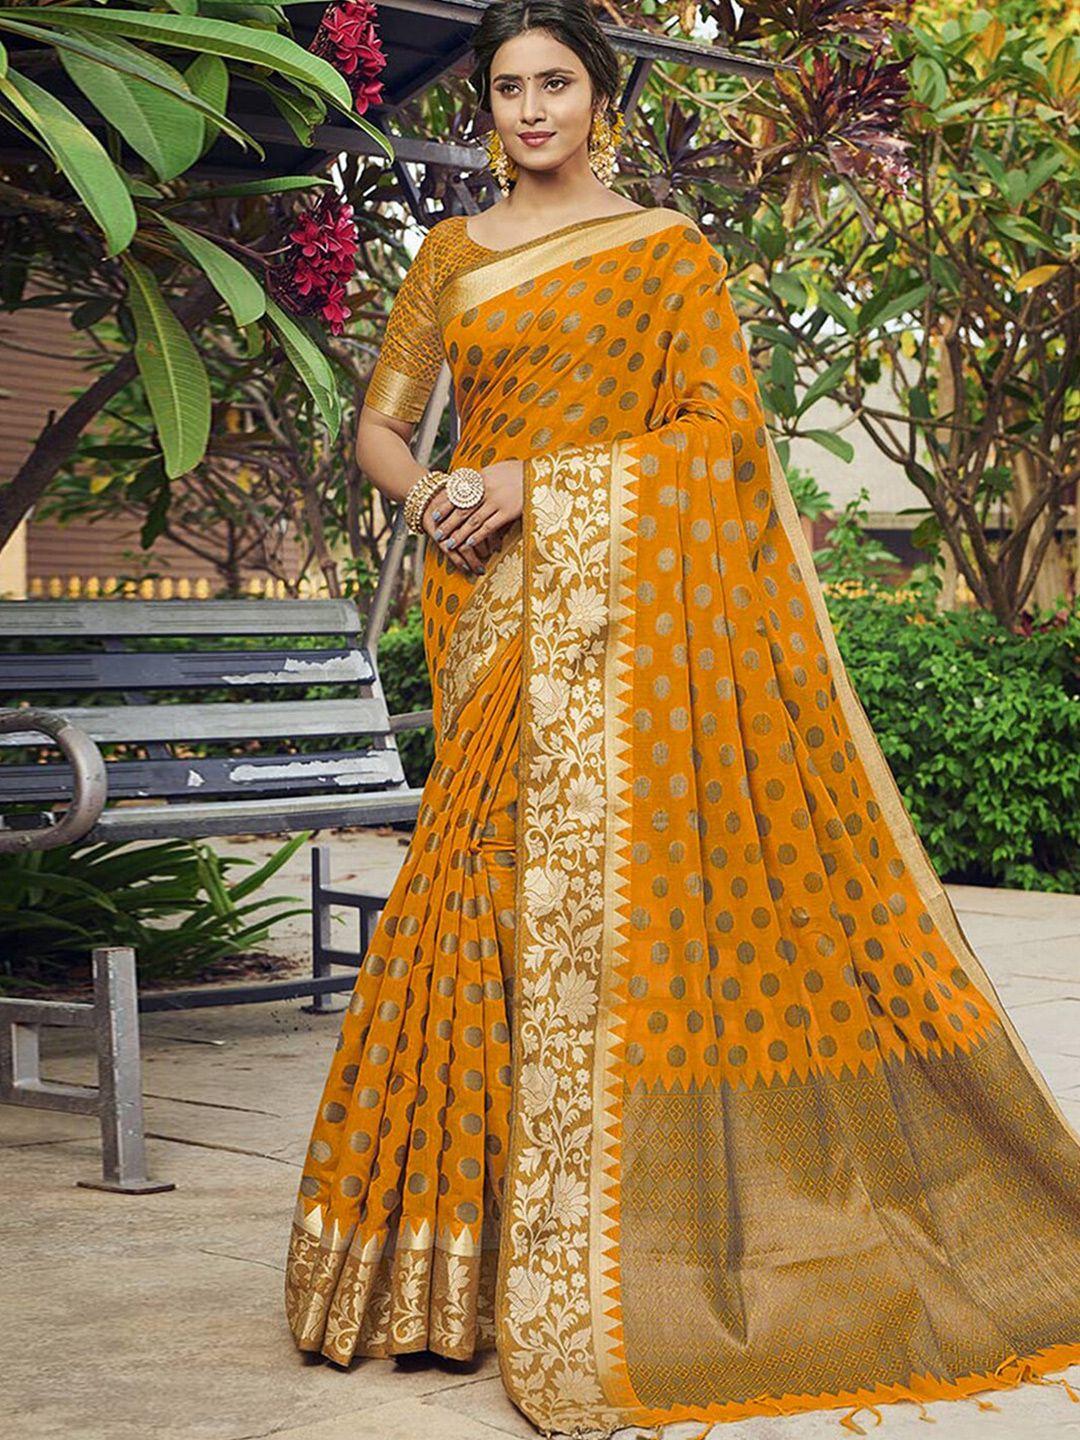 satrani yellow & gold-toned polka dot zari saree